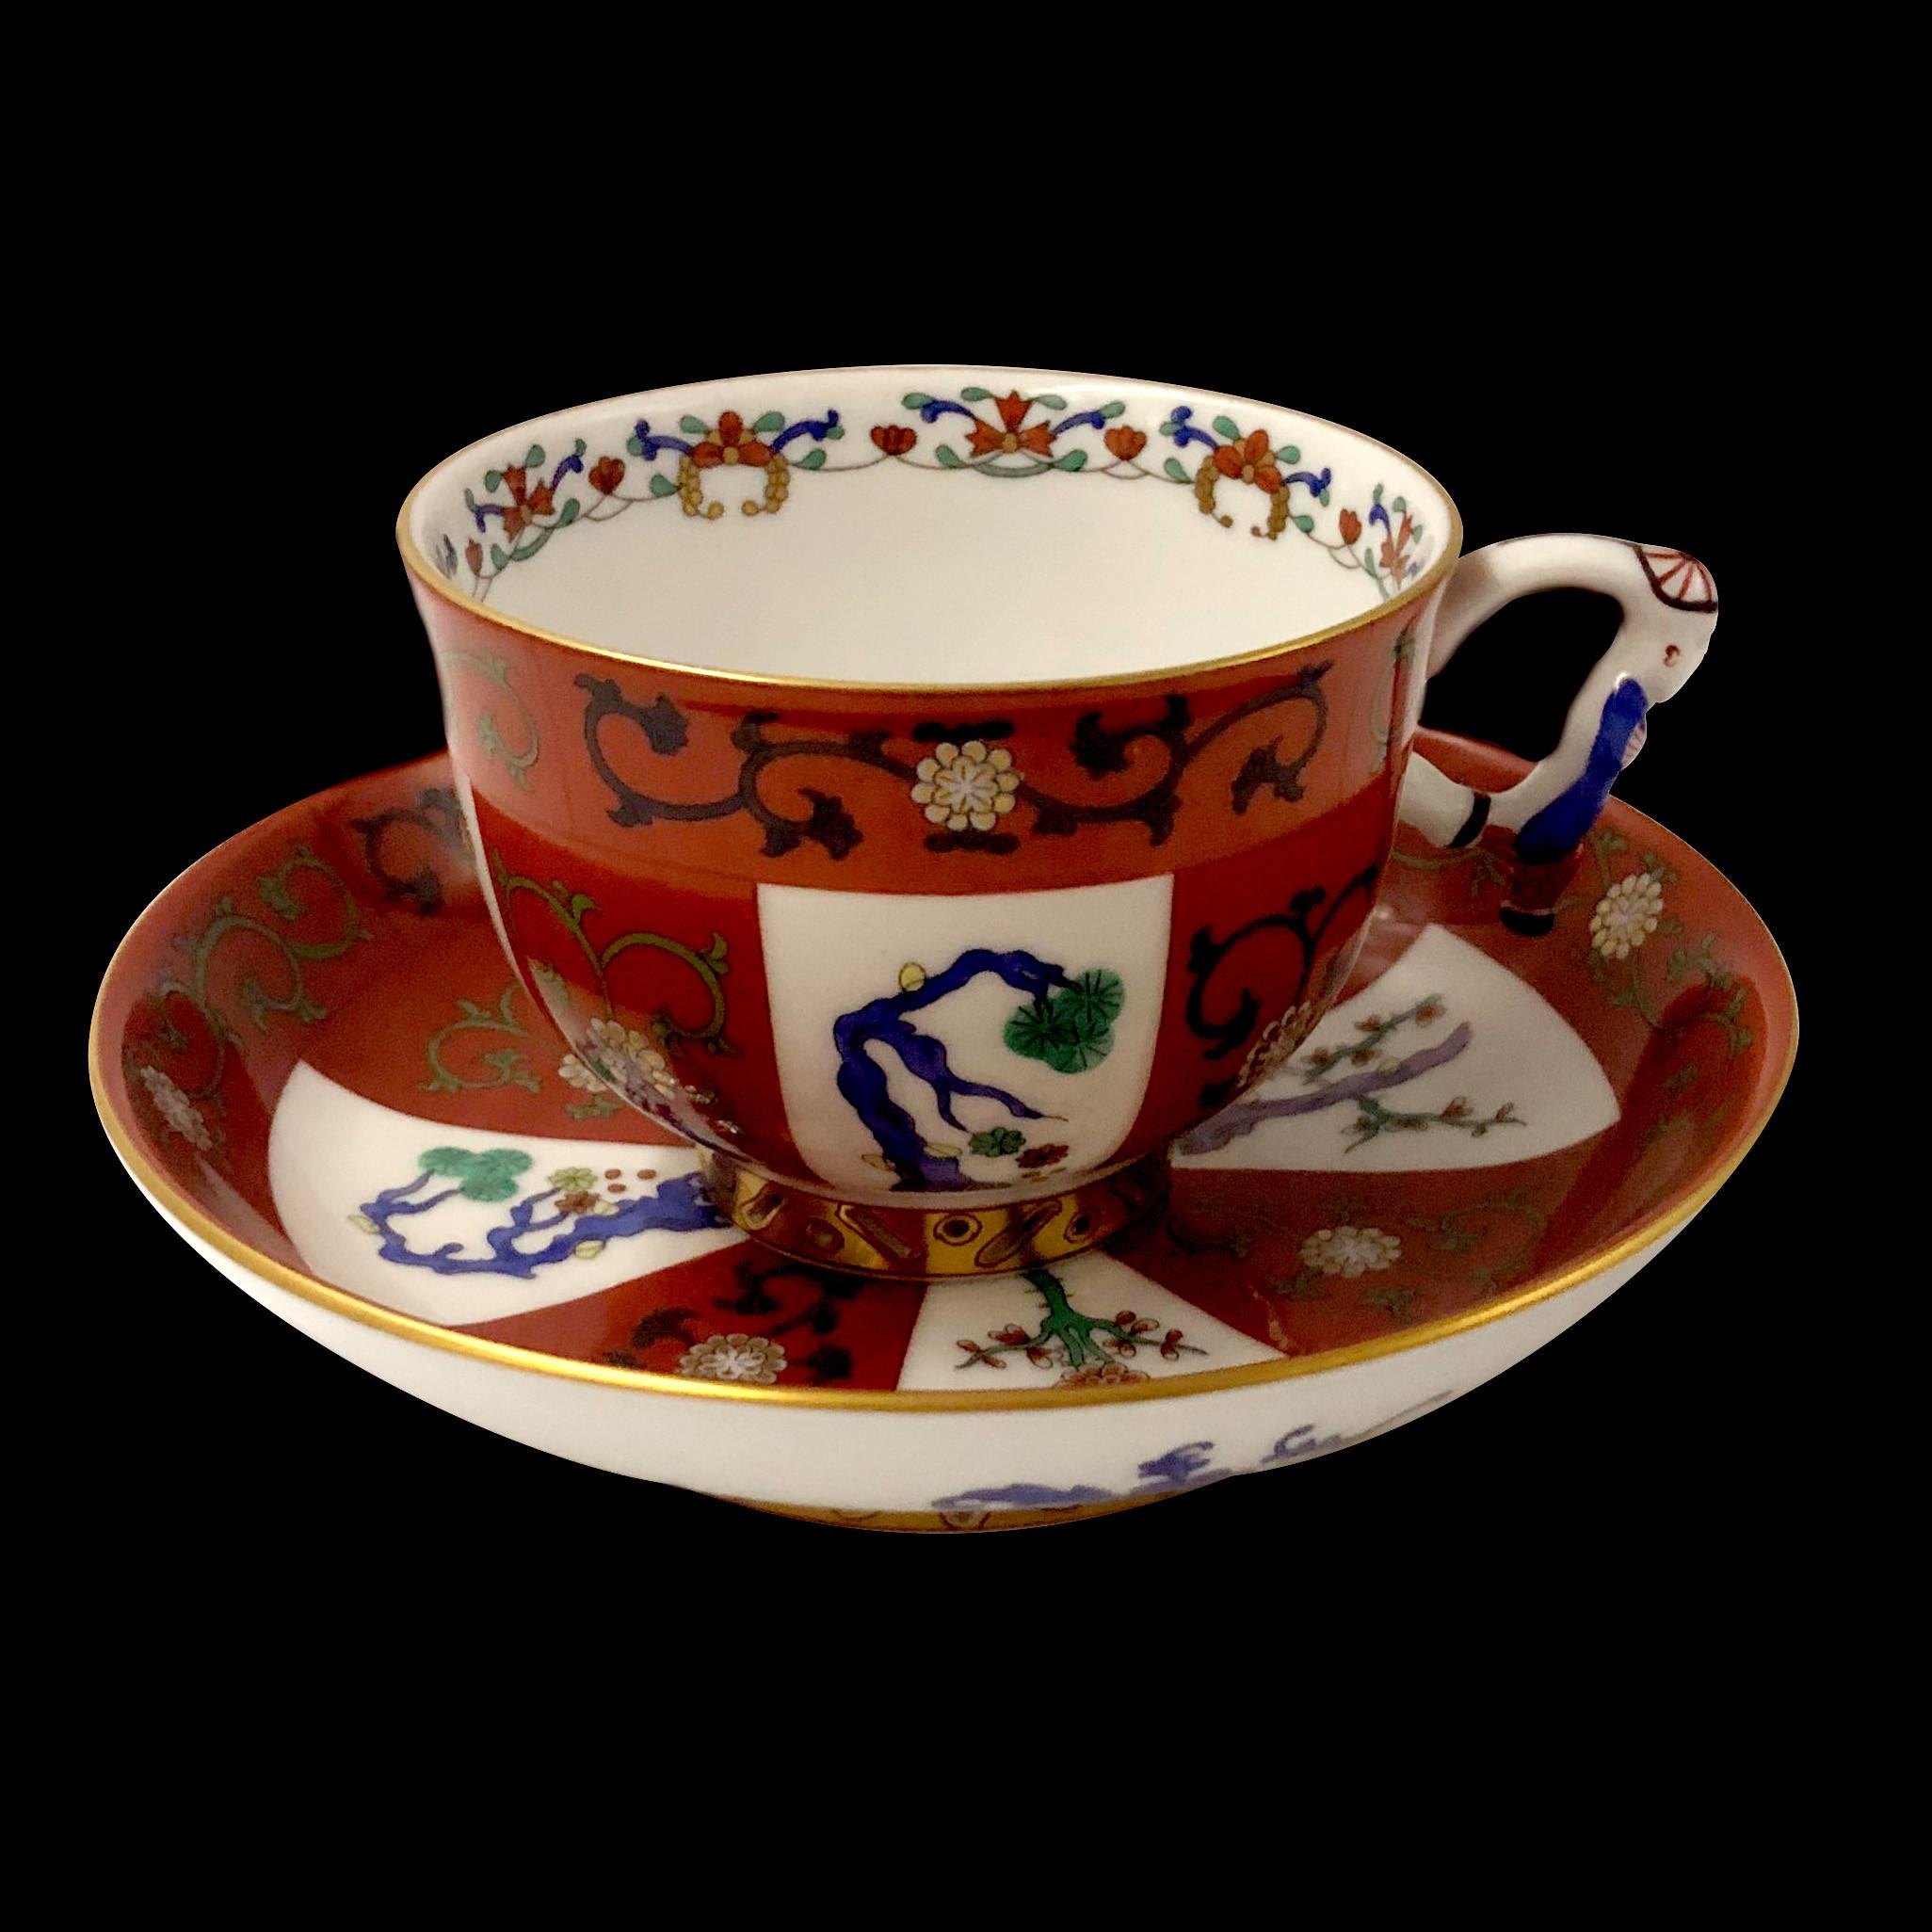 Godollo Tea Set in Herend Porcelain for Famous Queen Elizabeth 1